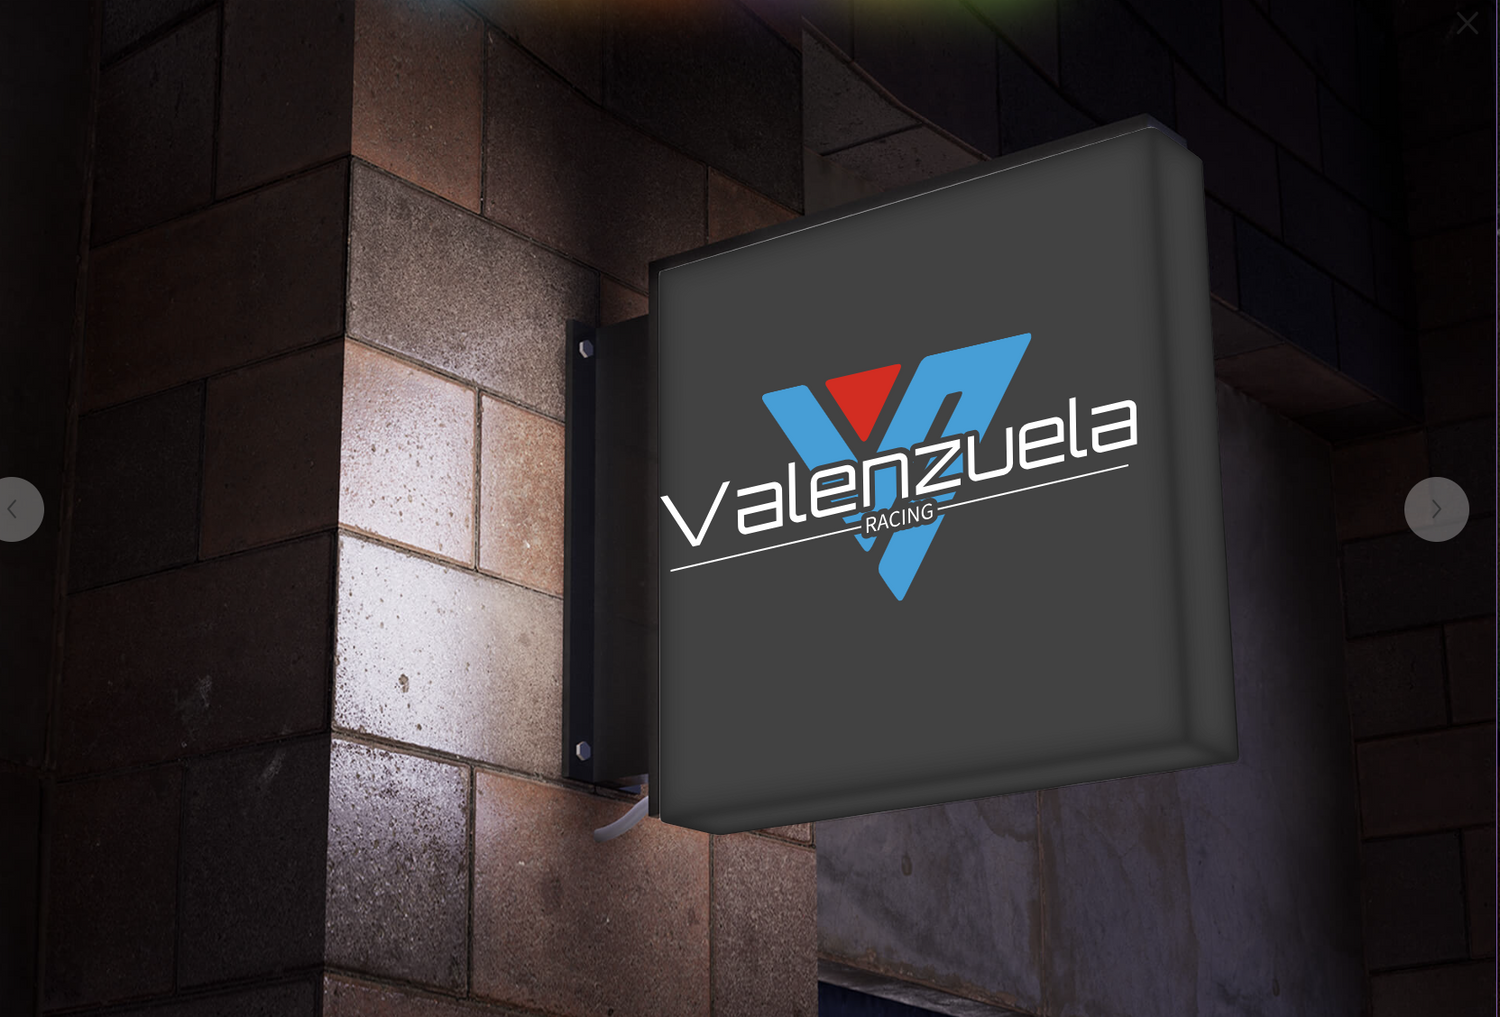 Valenzuela Racing store sign